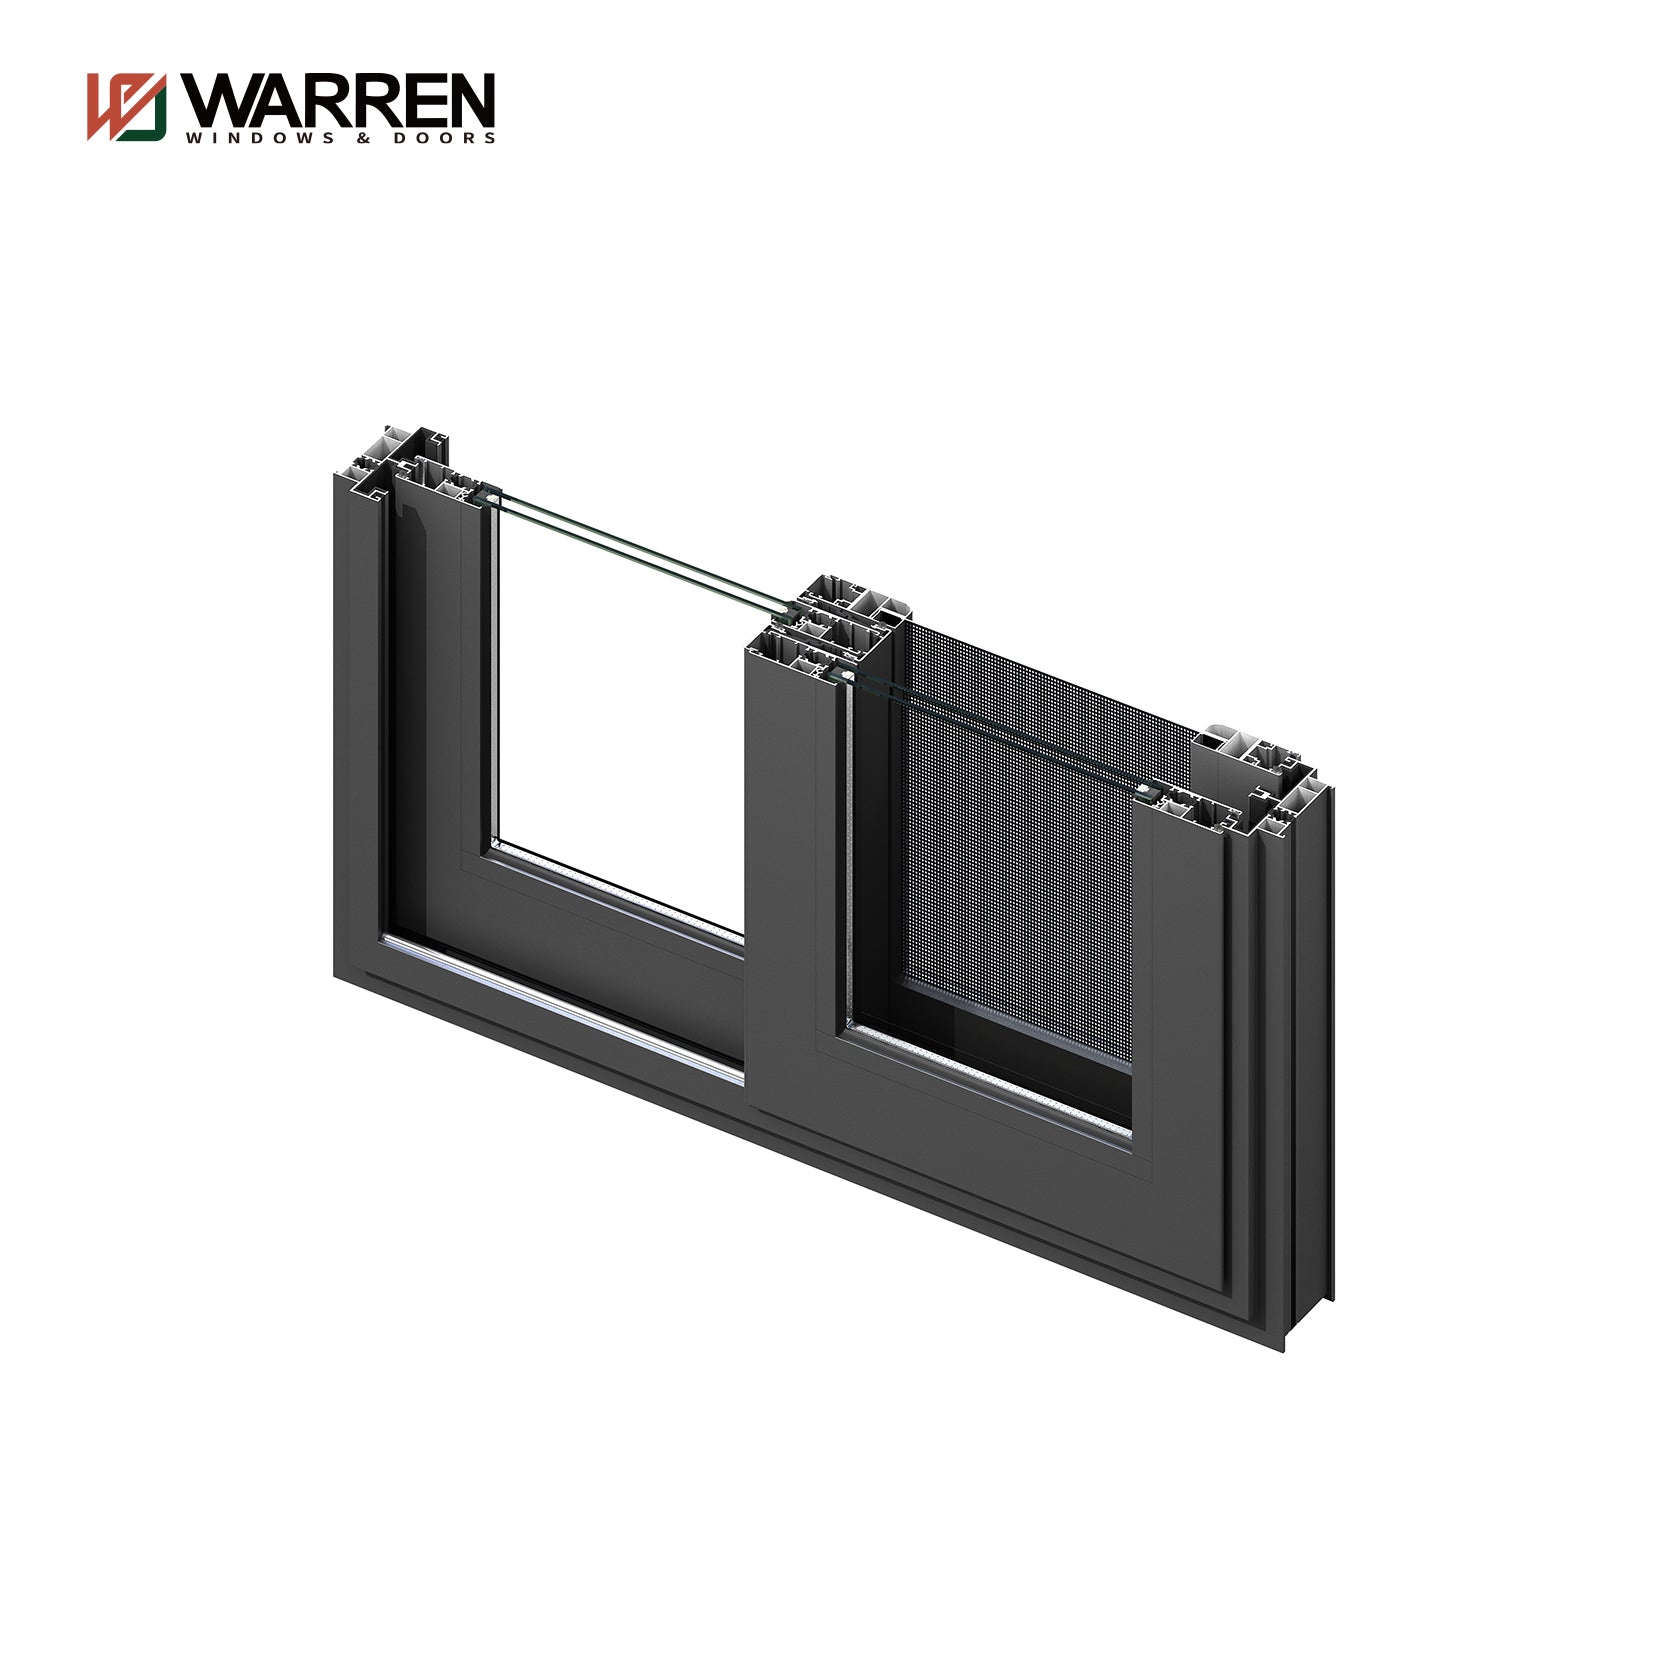 Warren 96x60 window 8x5 window 8ft x 5ft high quality tempered double glazed custom made colors sliding windows